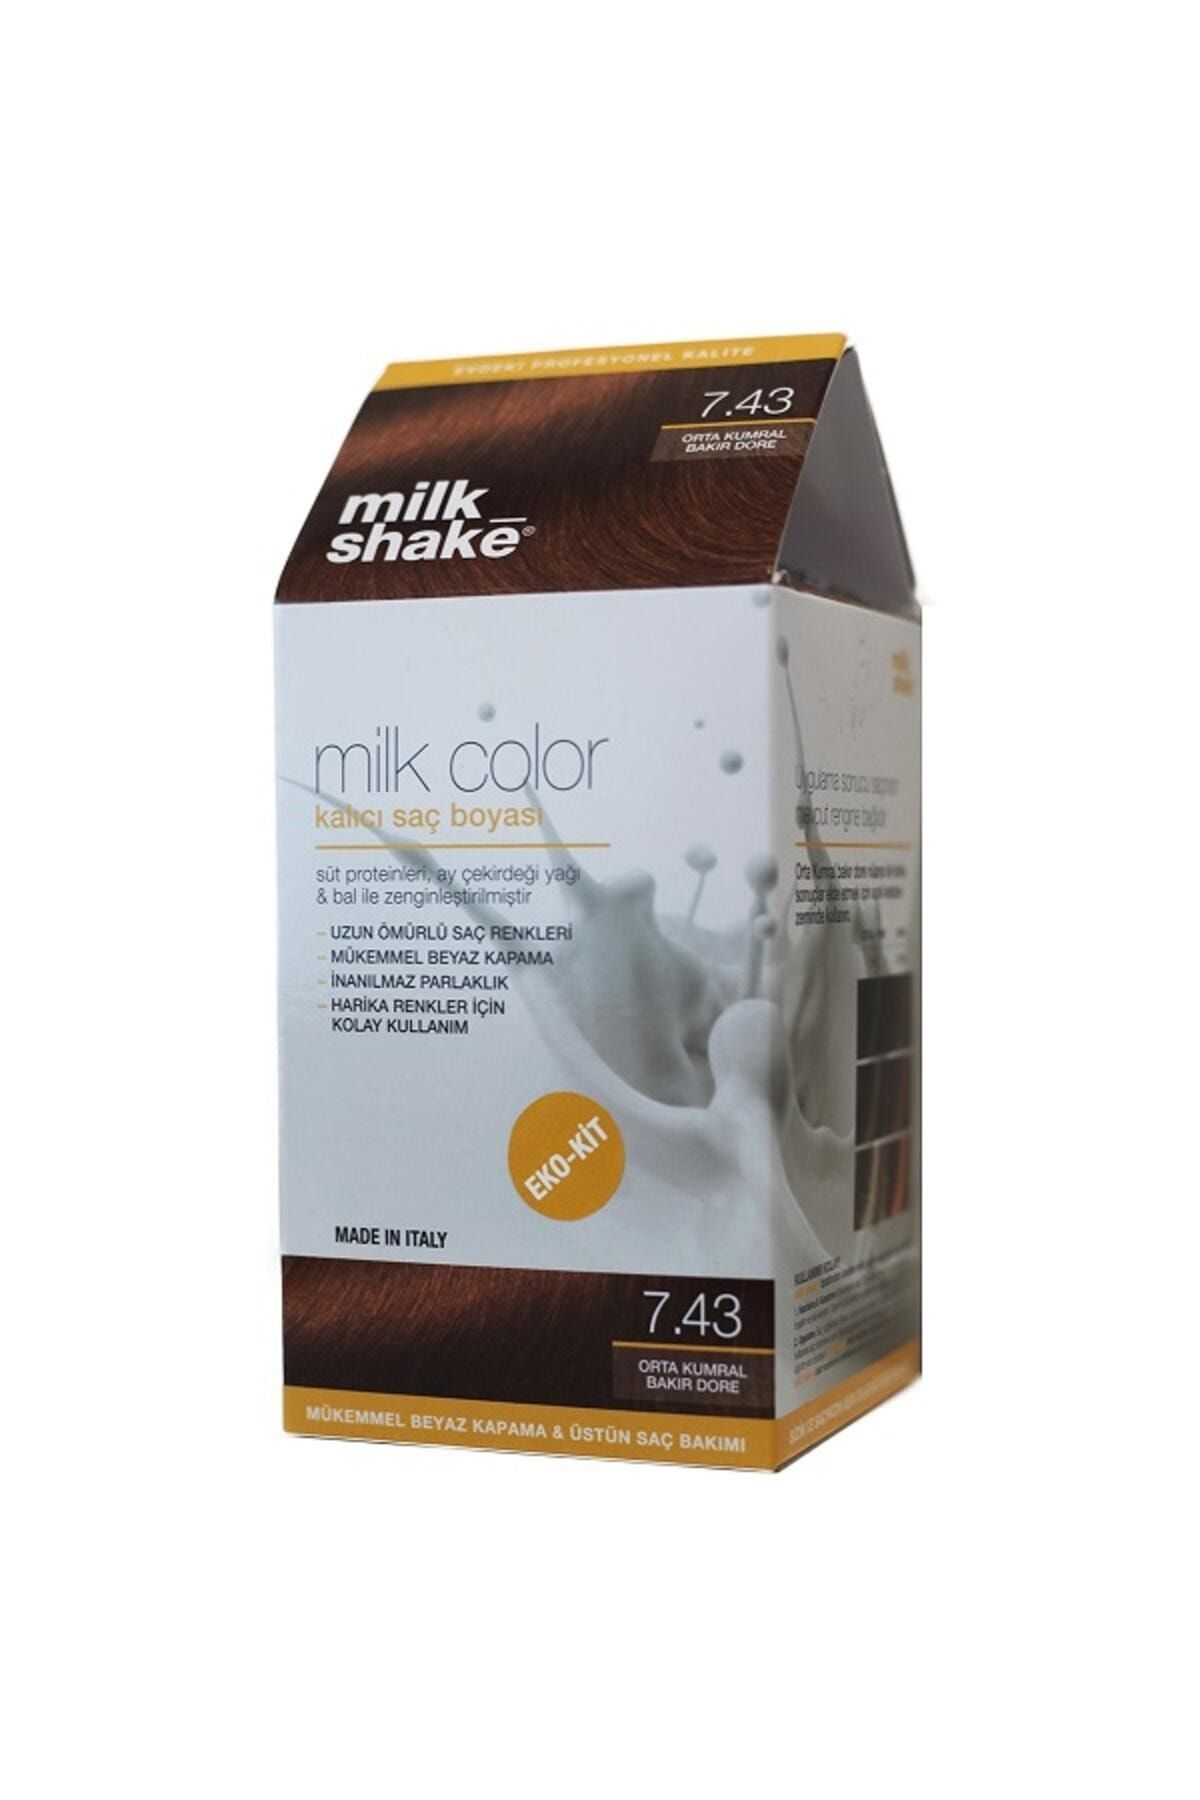 Milkshake Milk Shake 7.43 Orta Kumral Bakır Dore